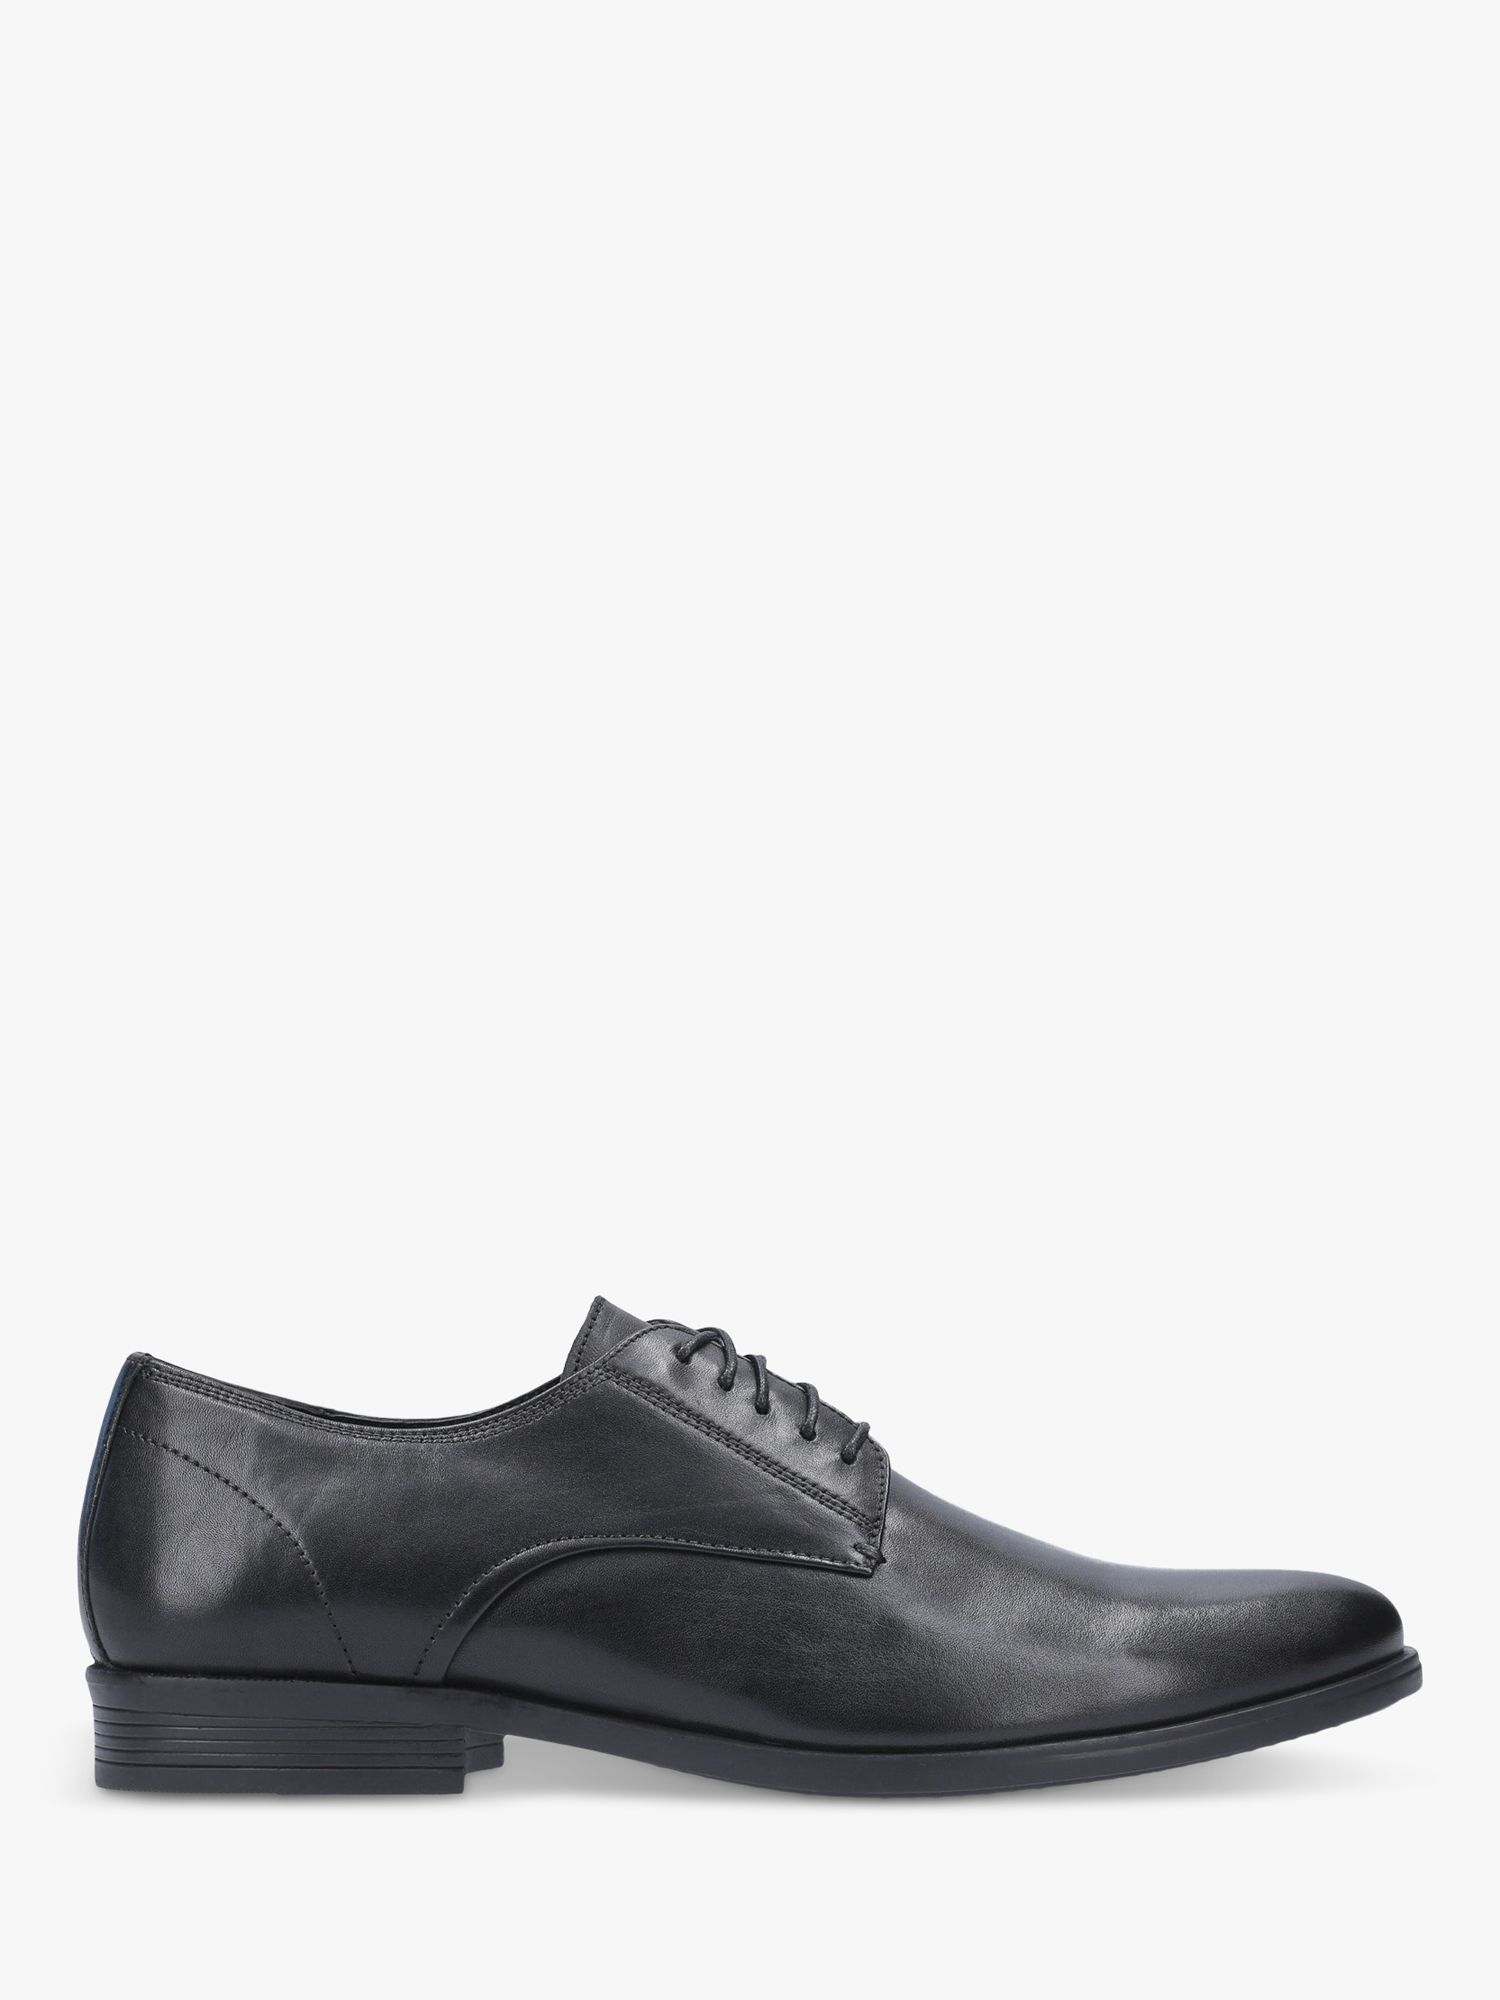 Matte Black Oxford Shoes